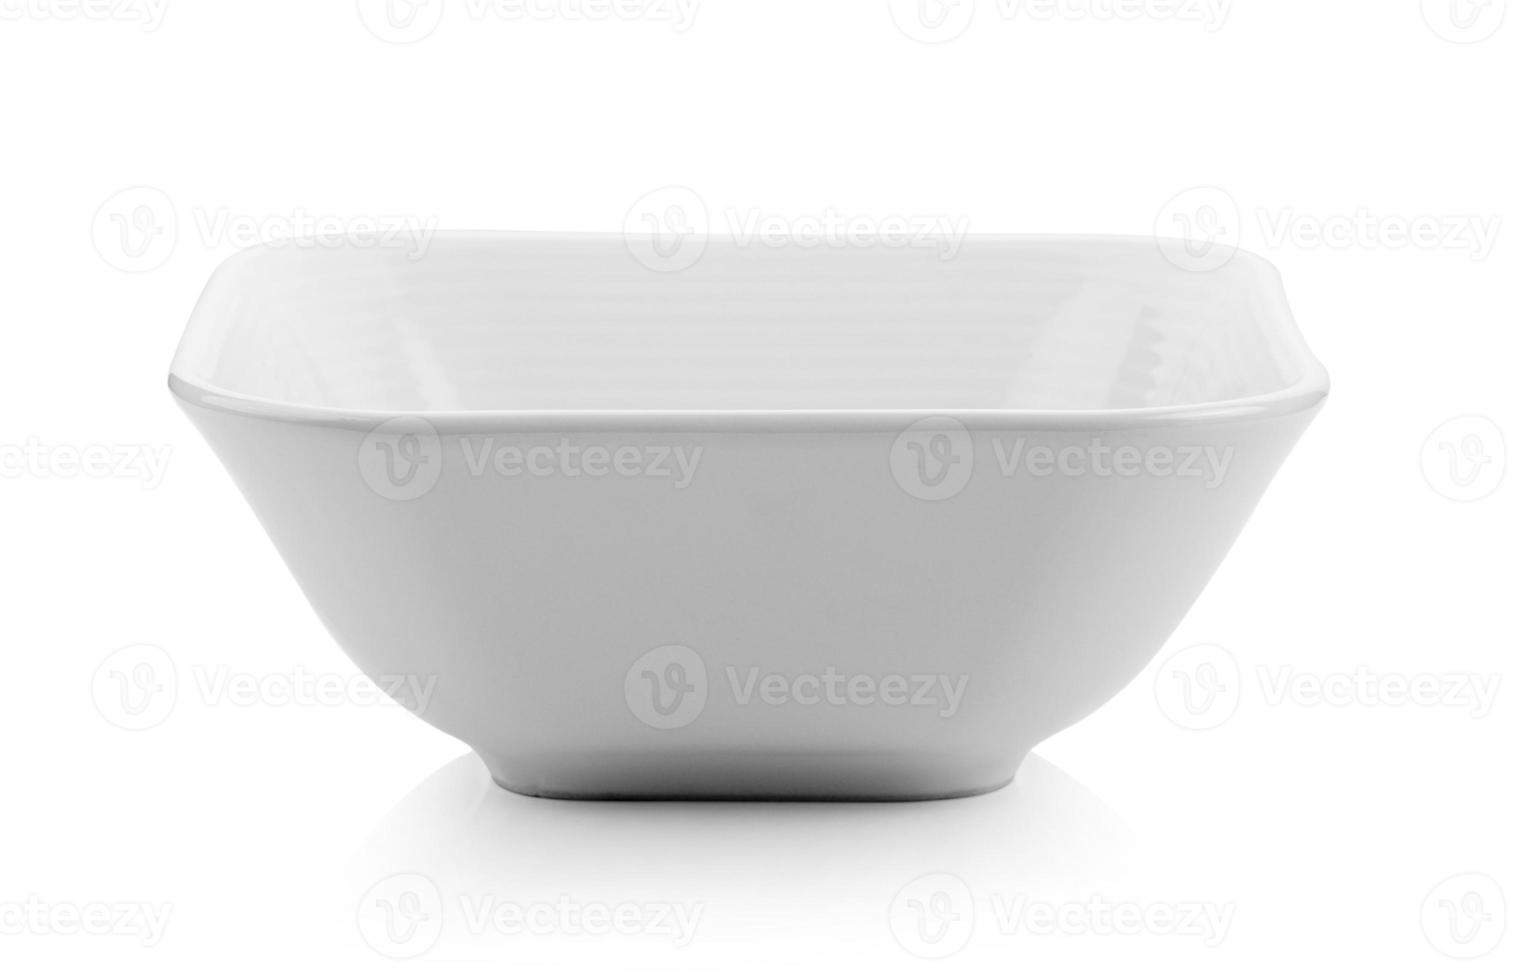 ceramic bowl on white background photo